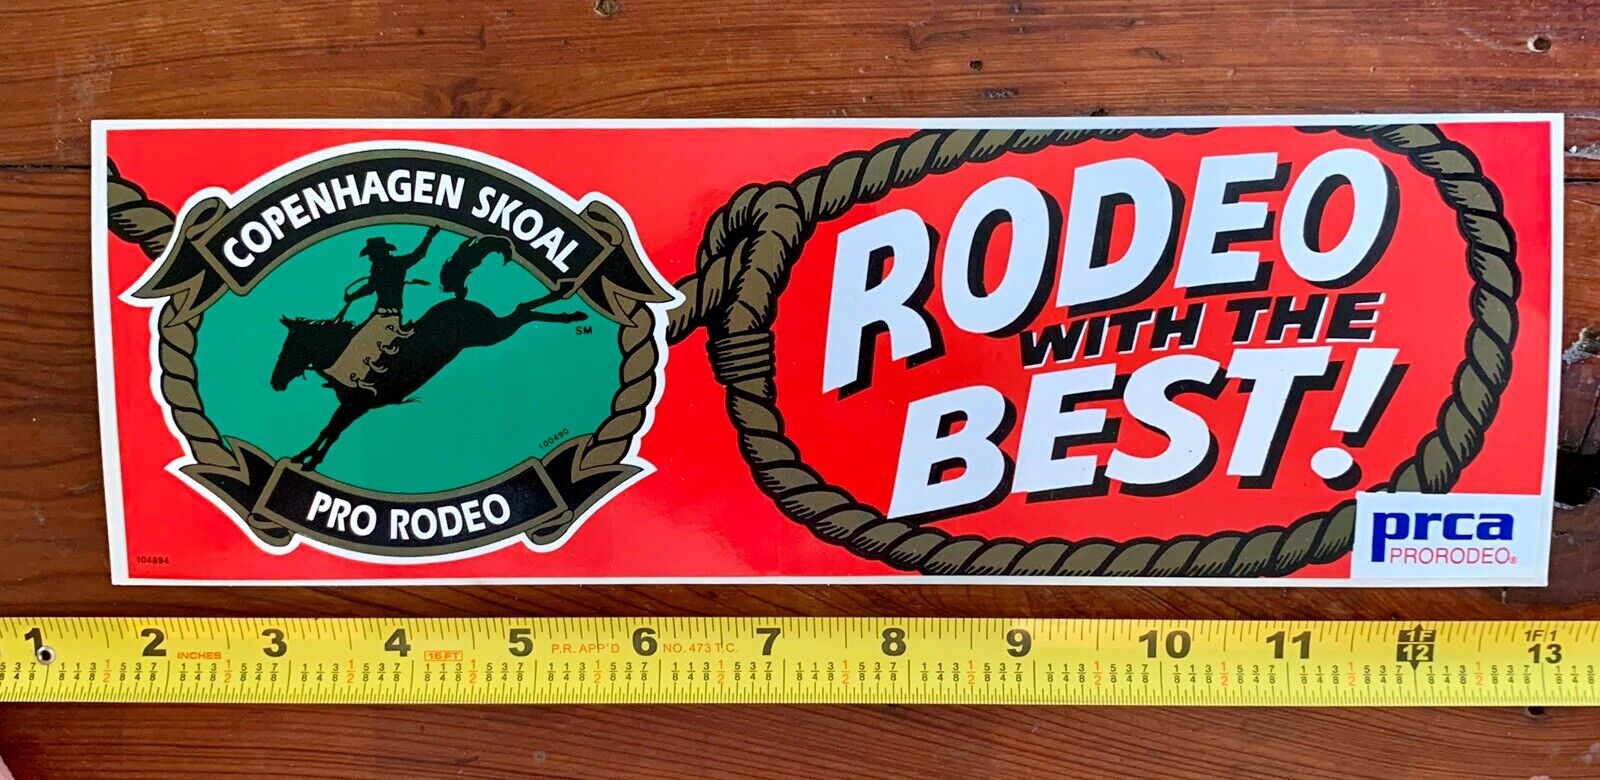 Copenhagen Skoal PRCA “Rodeo With The Best” Sticker Promotional Collectors Item